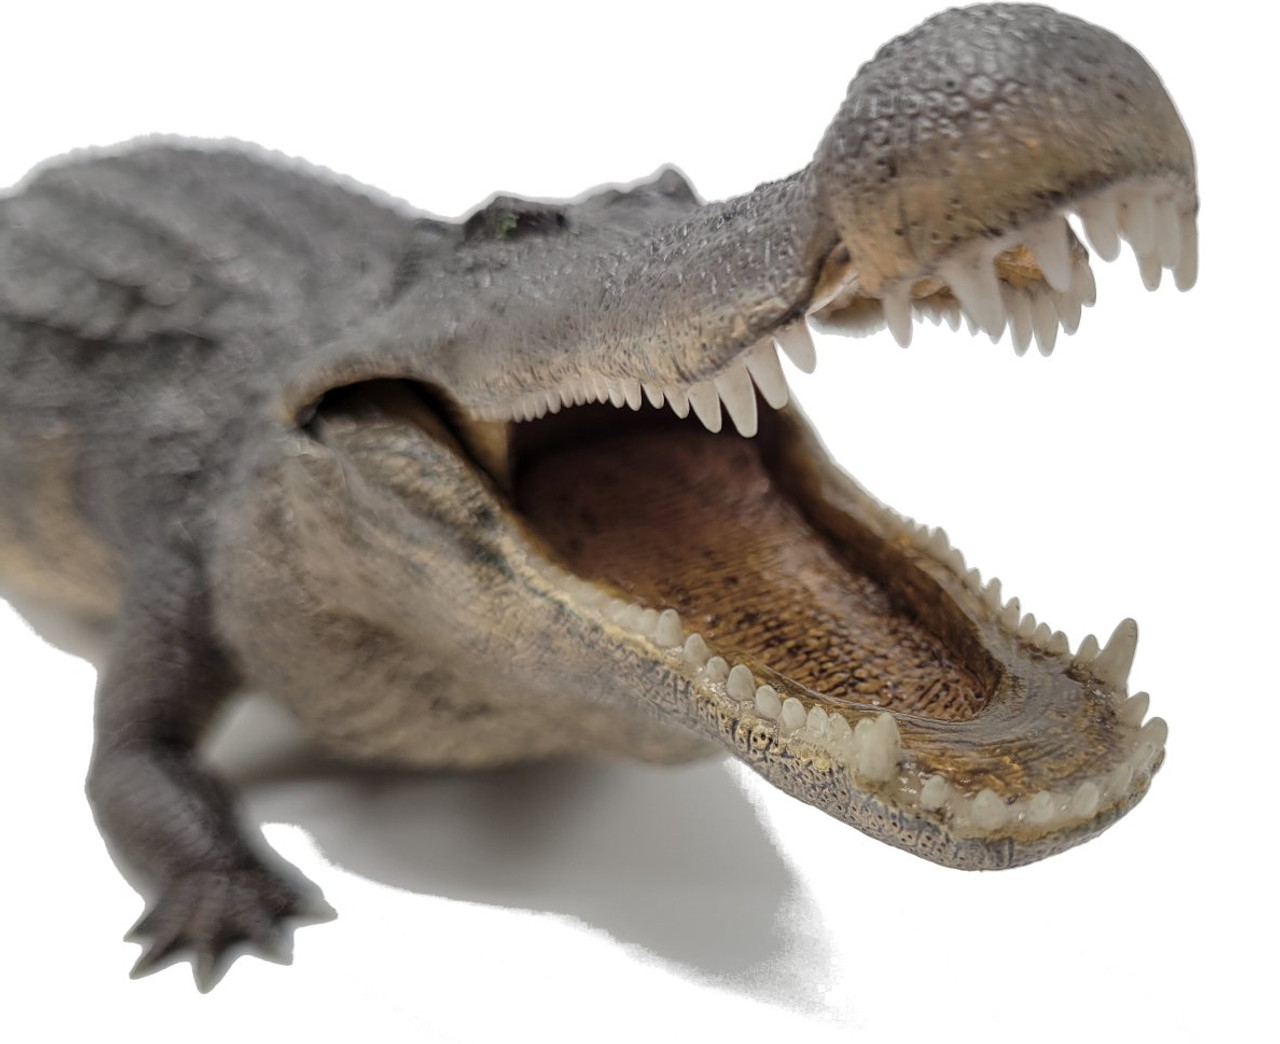 REBOR-deinosuchus #161007 - Huge mouth